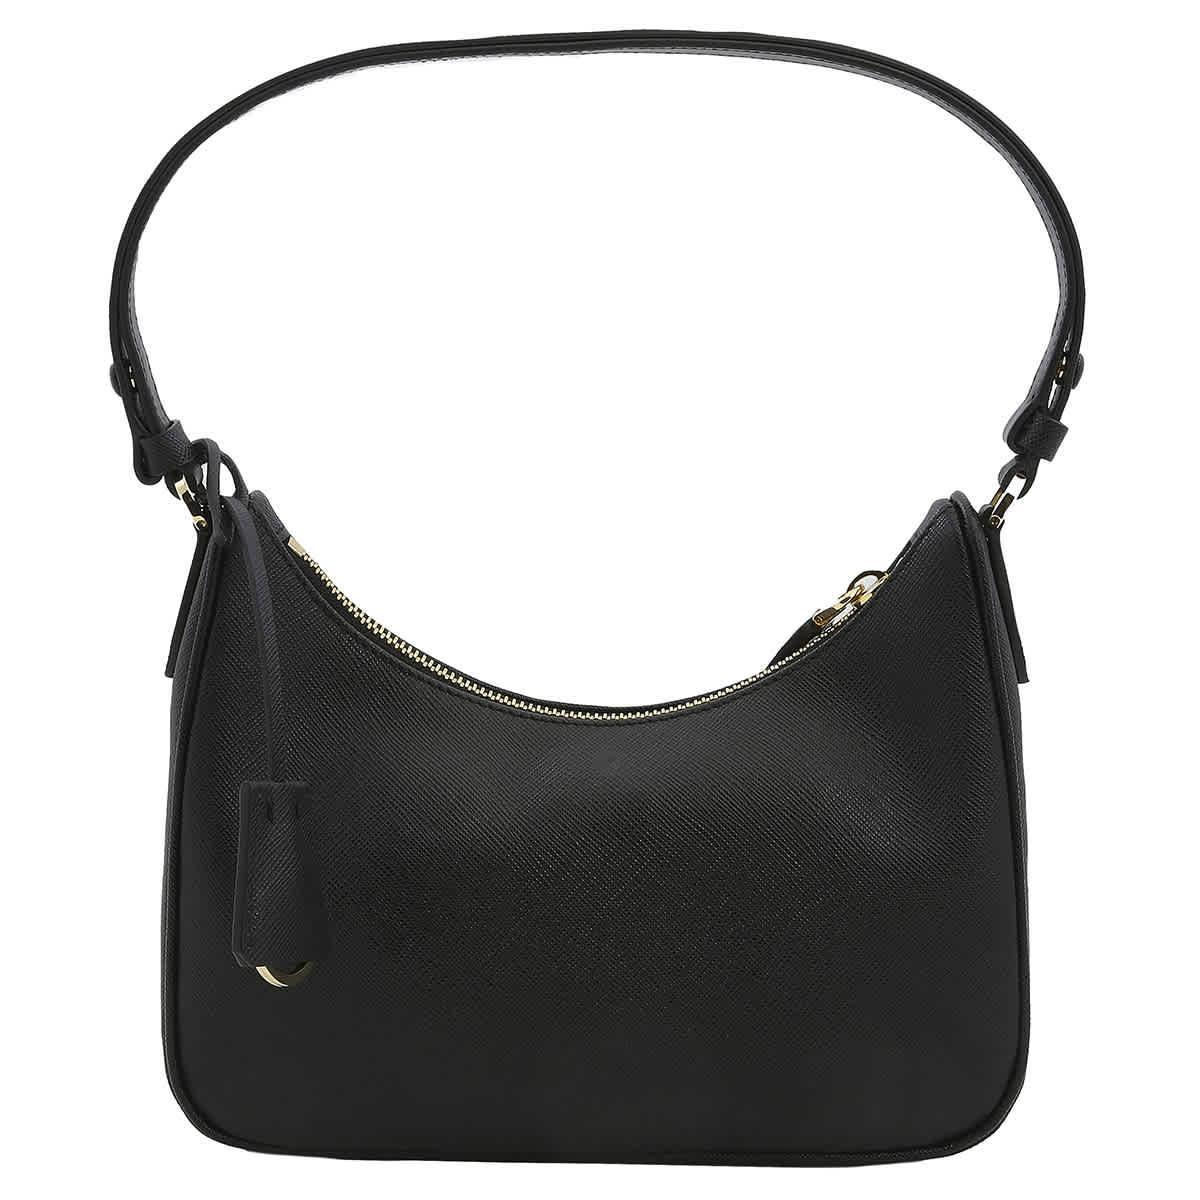 Womens Re-Edition Saffiano Leather Mini Bag Product Image